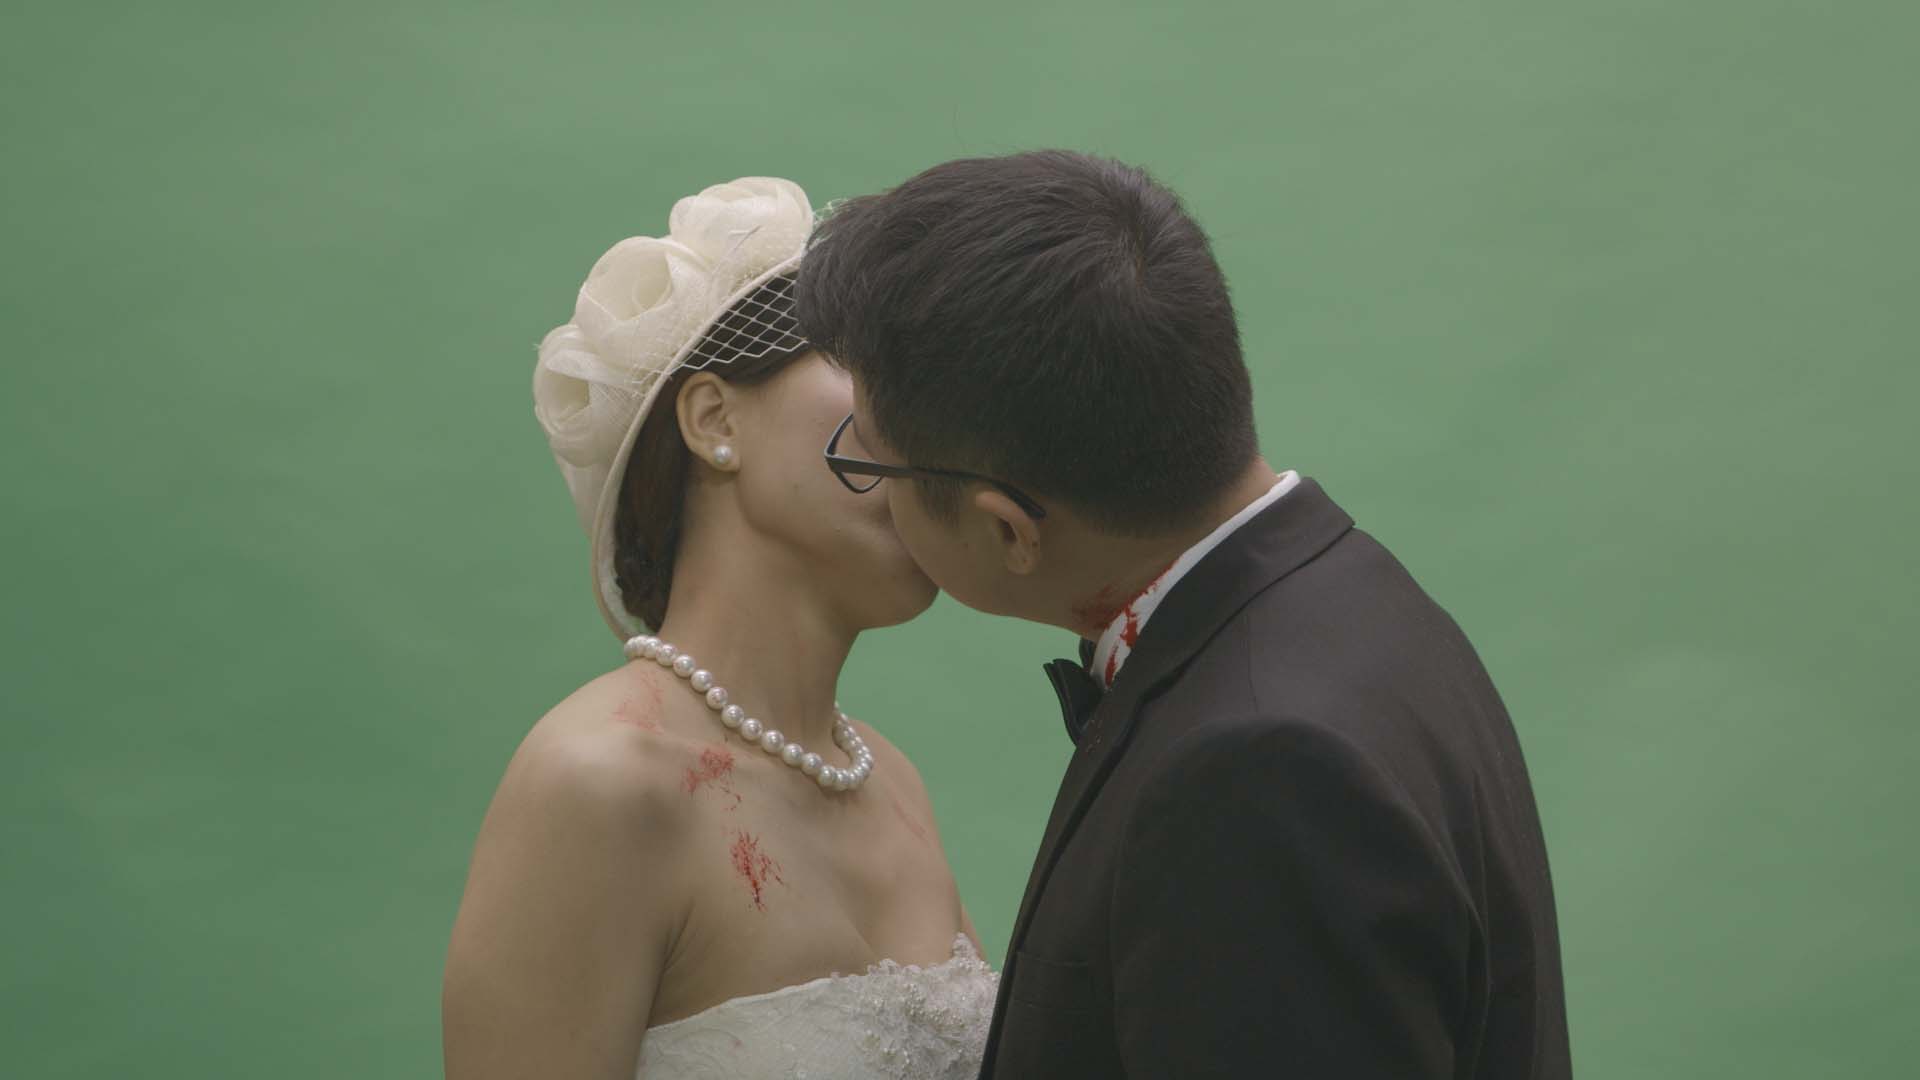 A bridge and groom kiss on green screen.